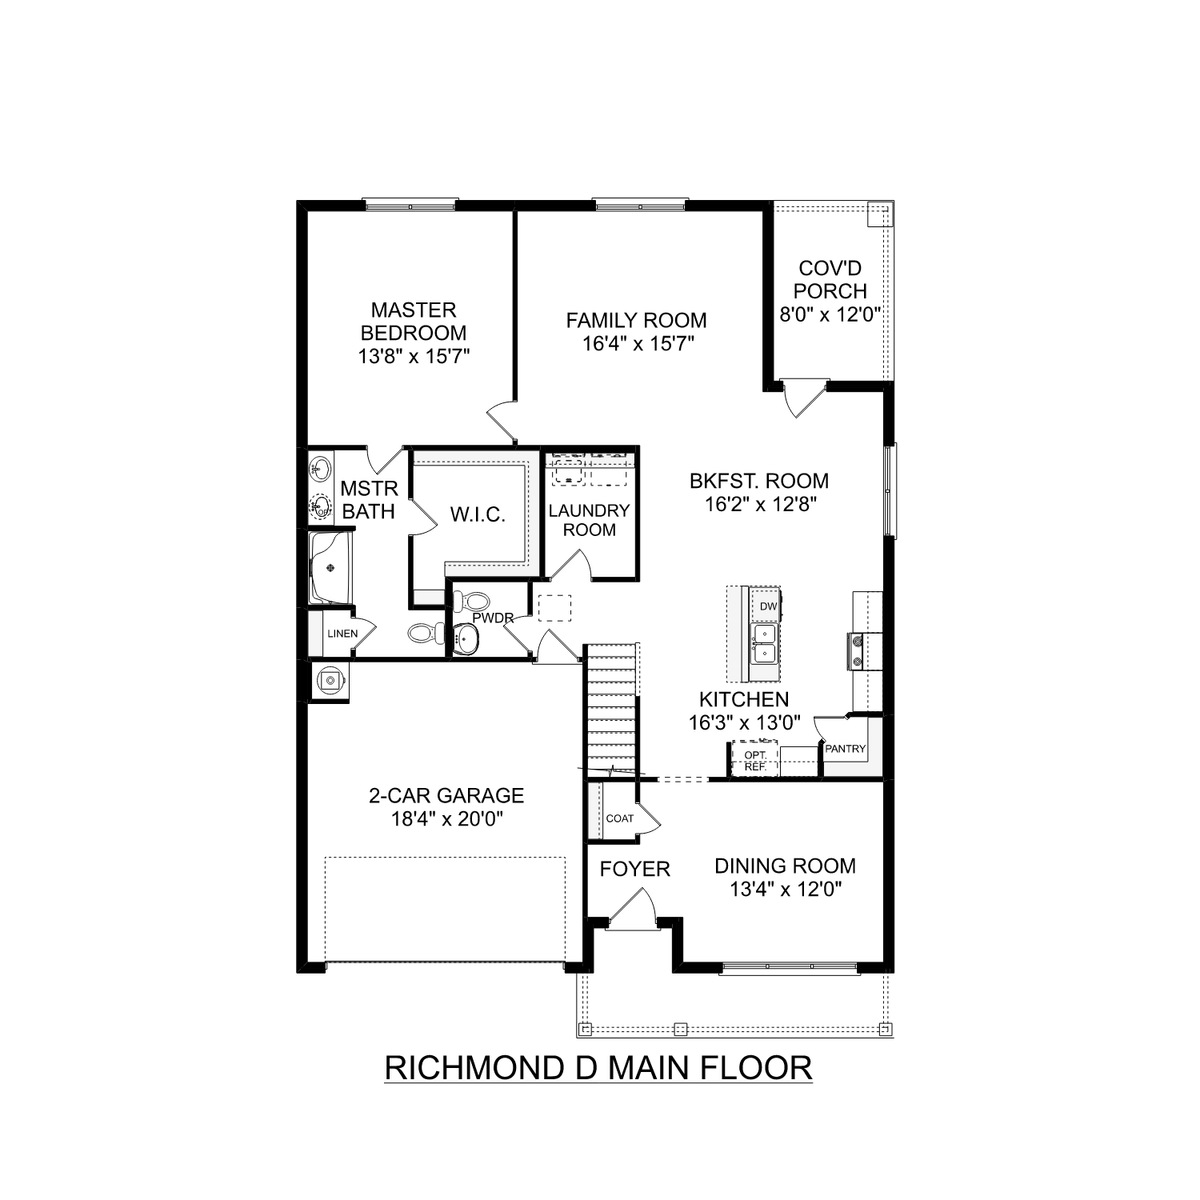 1 - The Richmond D buildable floor plan layout in Davidson Homes' Flint Meadows community.